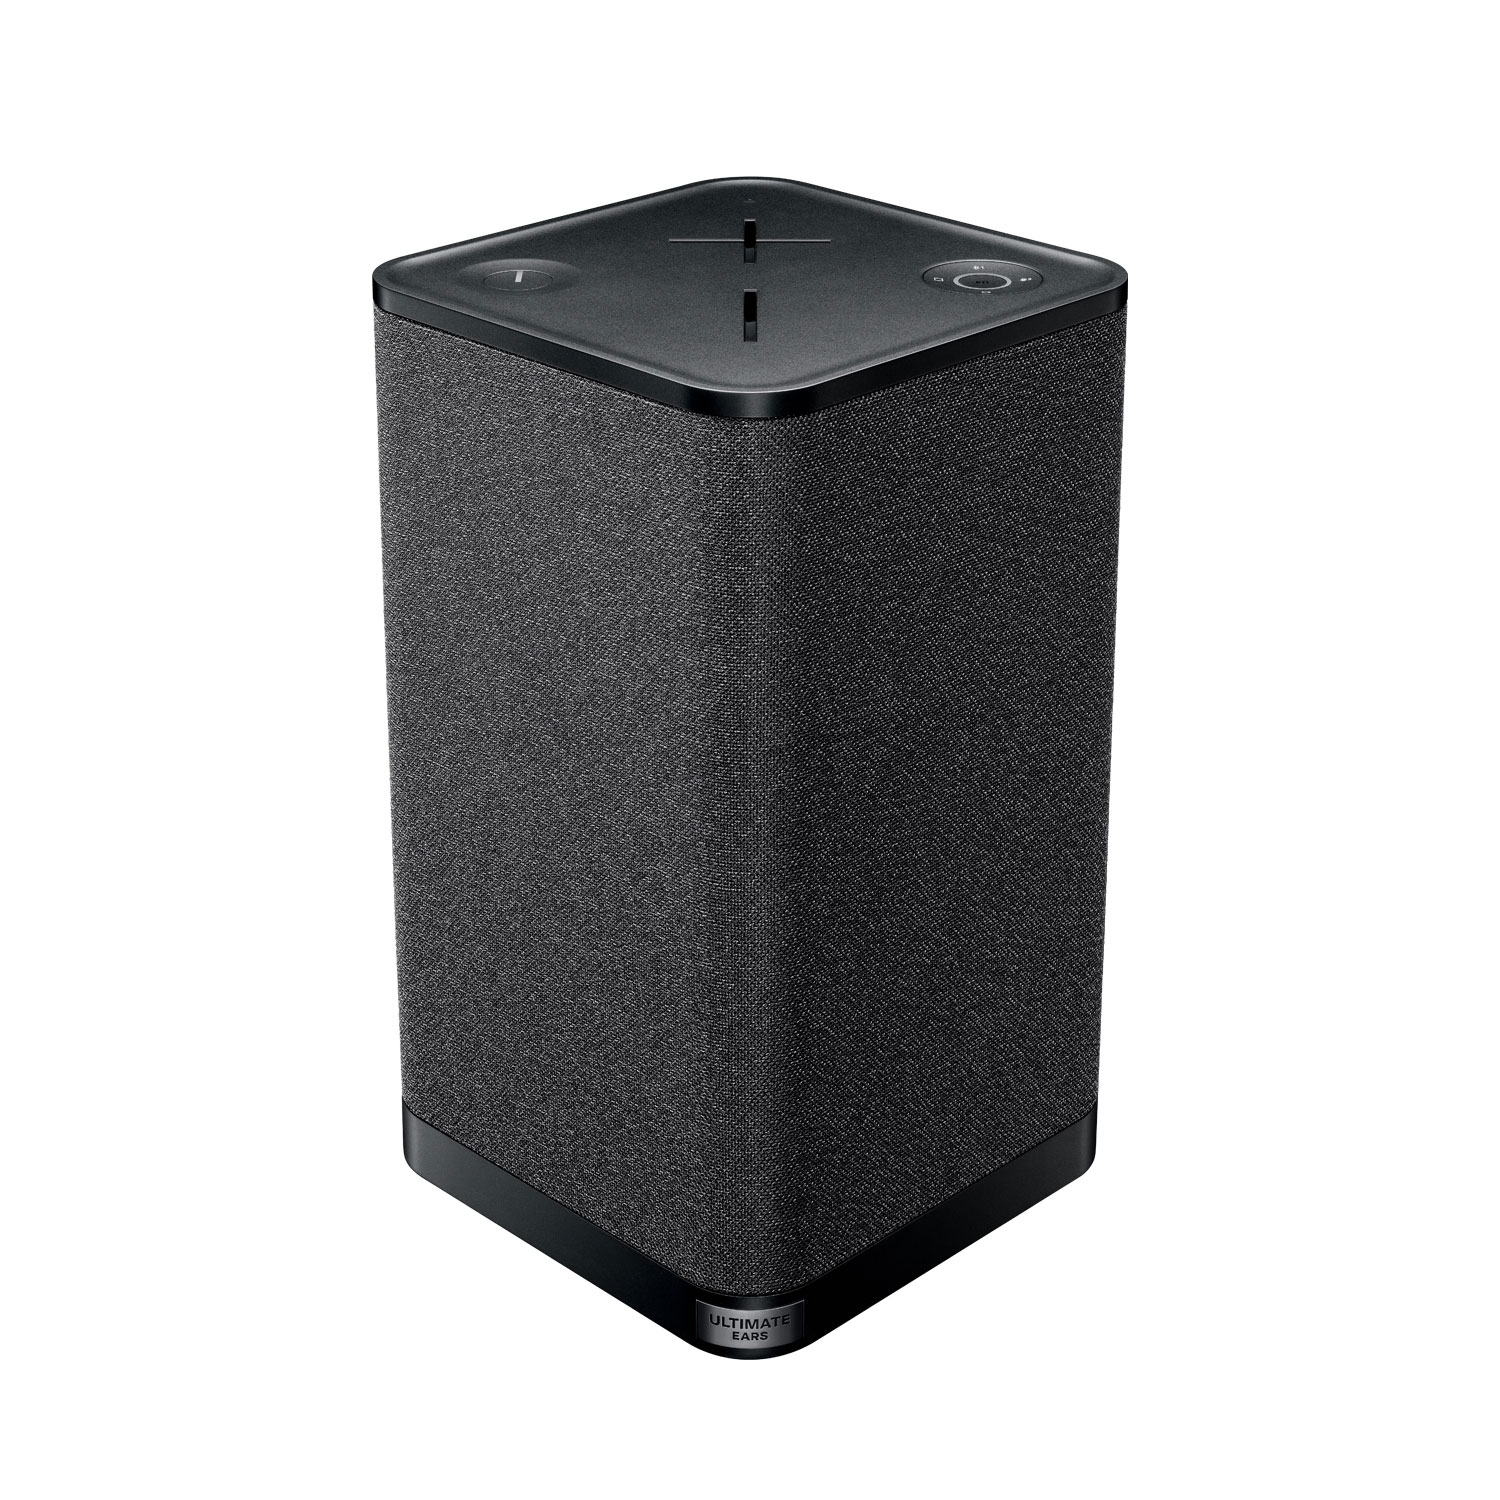 Ultimate Ears HYPERBOOM Splashproof Bluetooth Wireless Party Speaker - Black